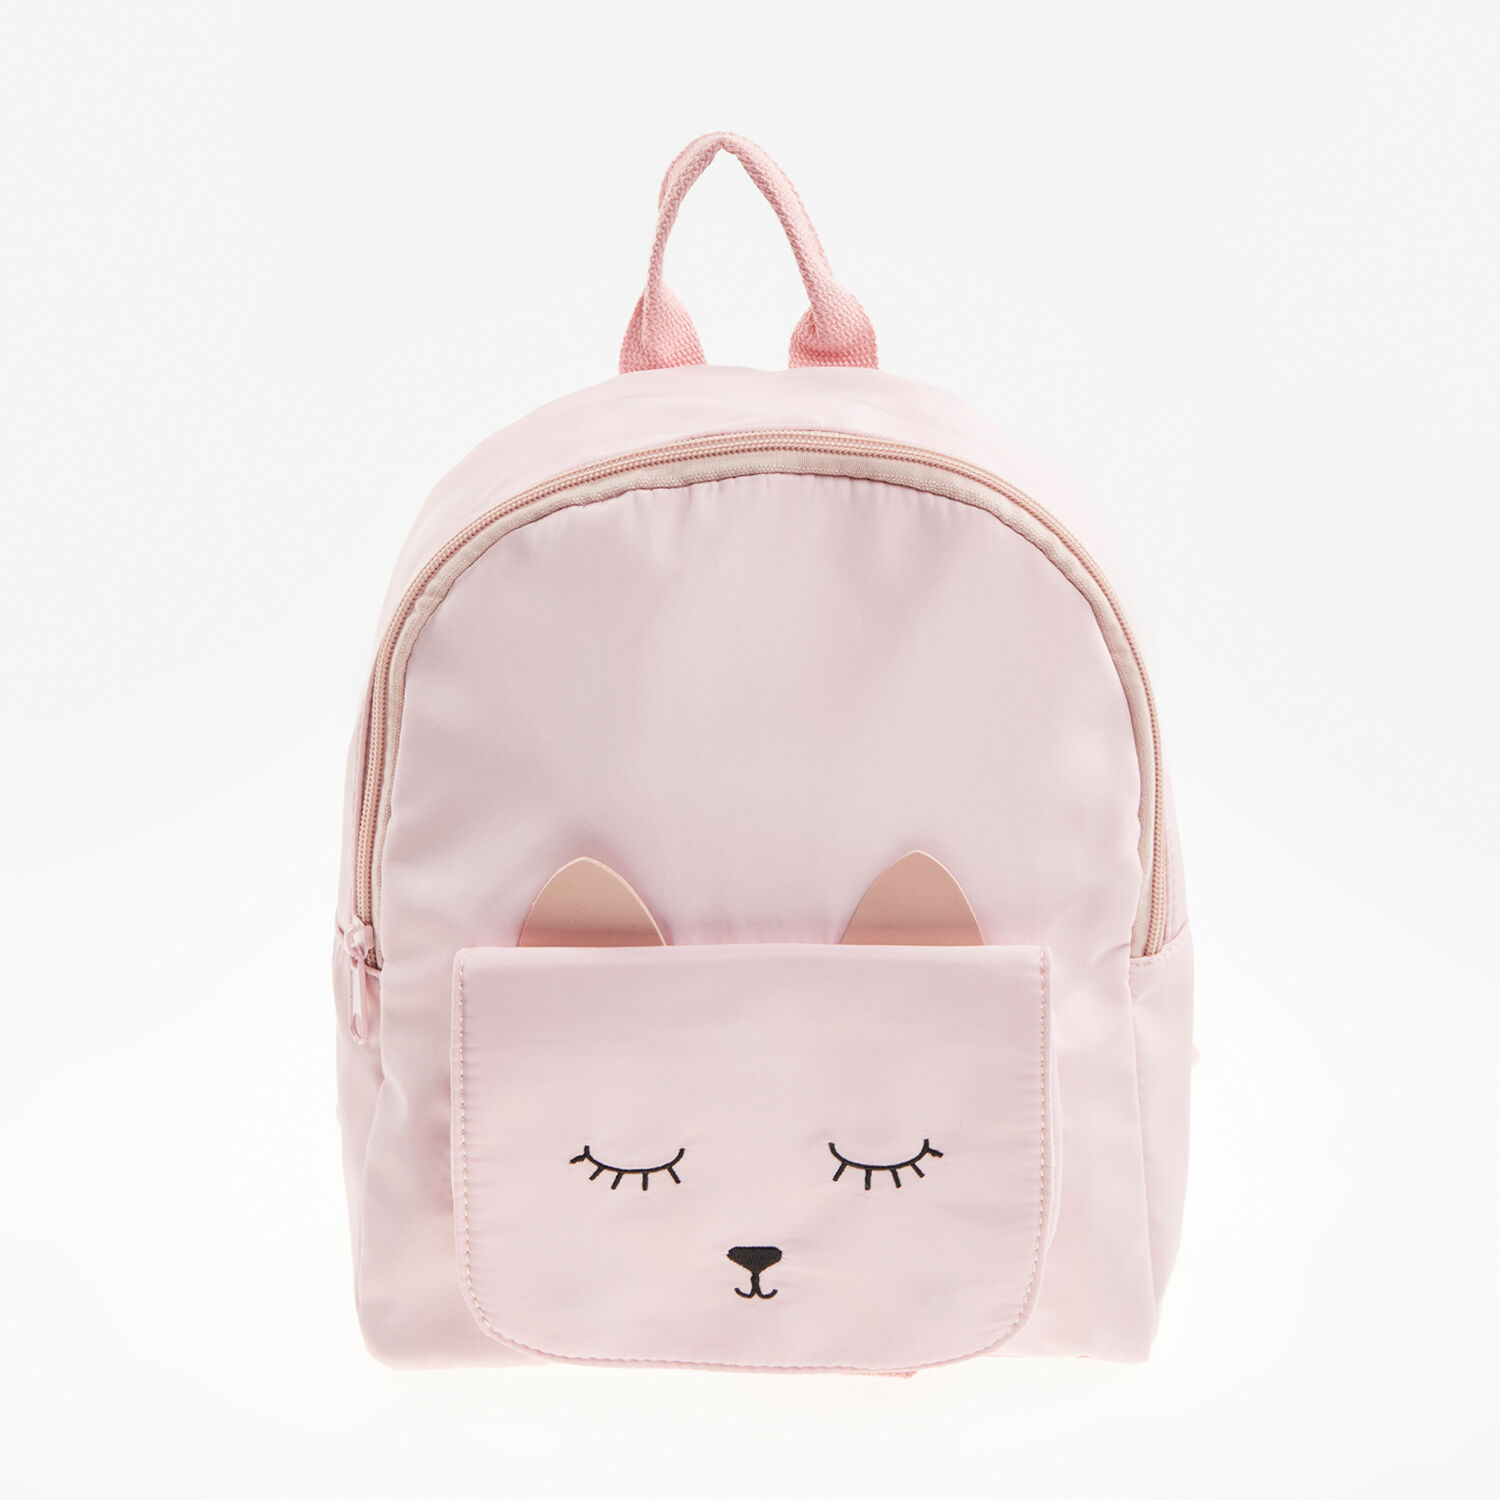 Розовый рюкзак с кошачьим мотивом Yuko B цена и фото